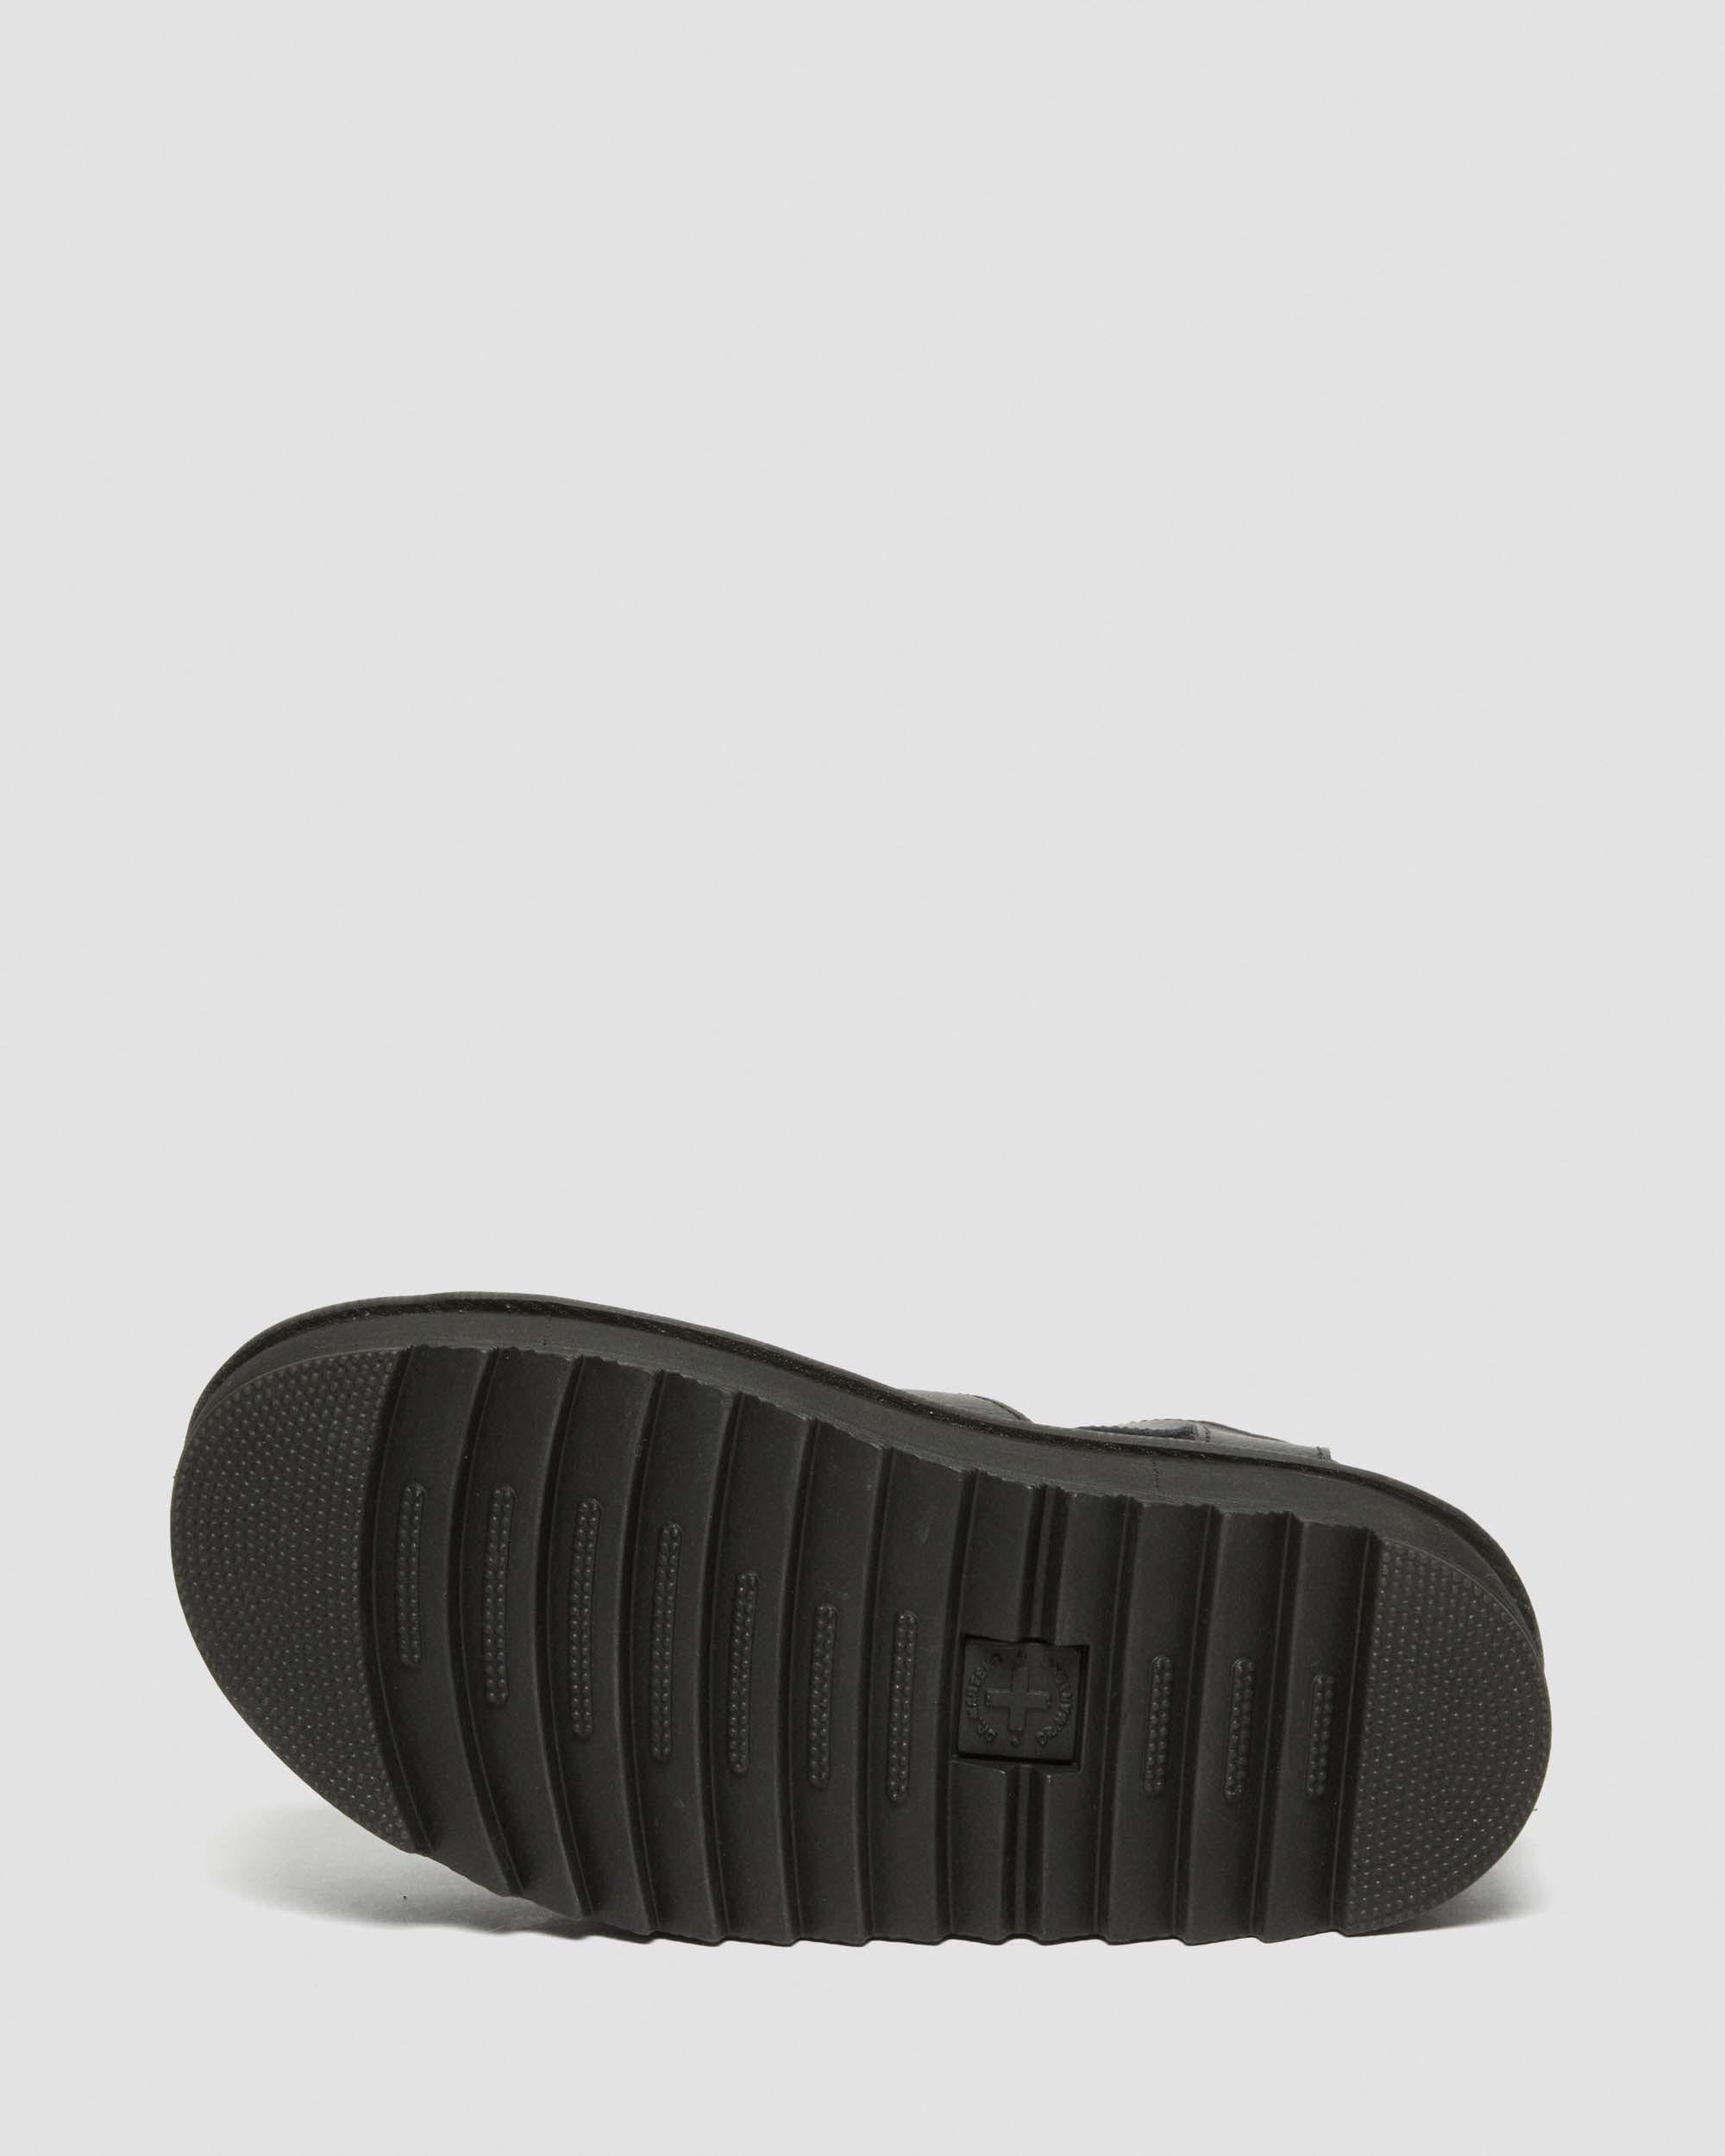 Blaire Piercing Leather Platform Sandals in Black